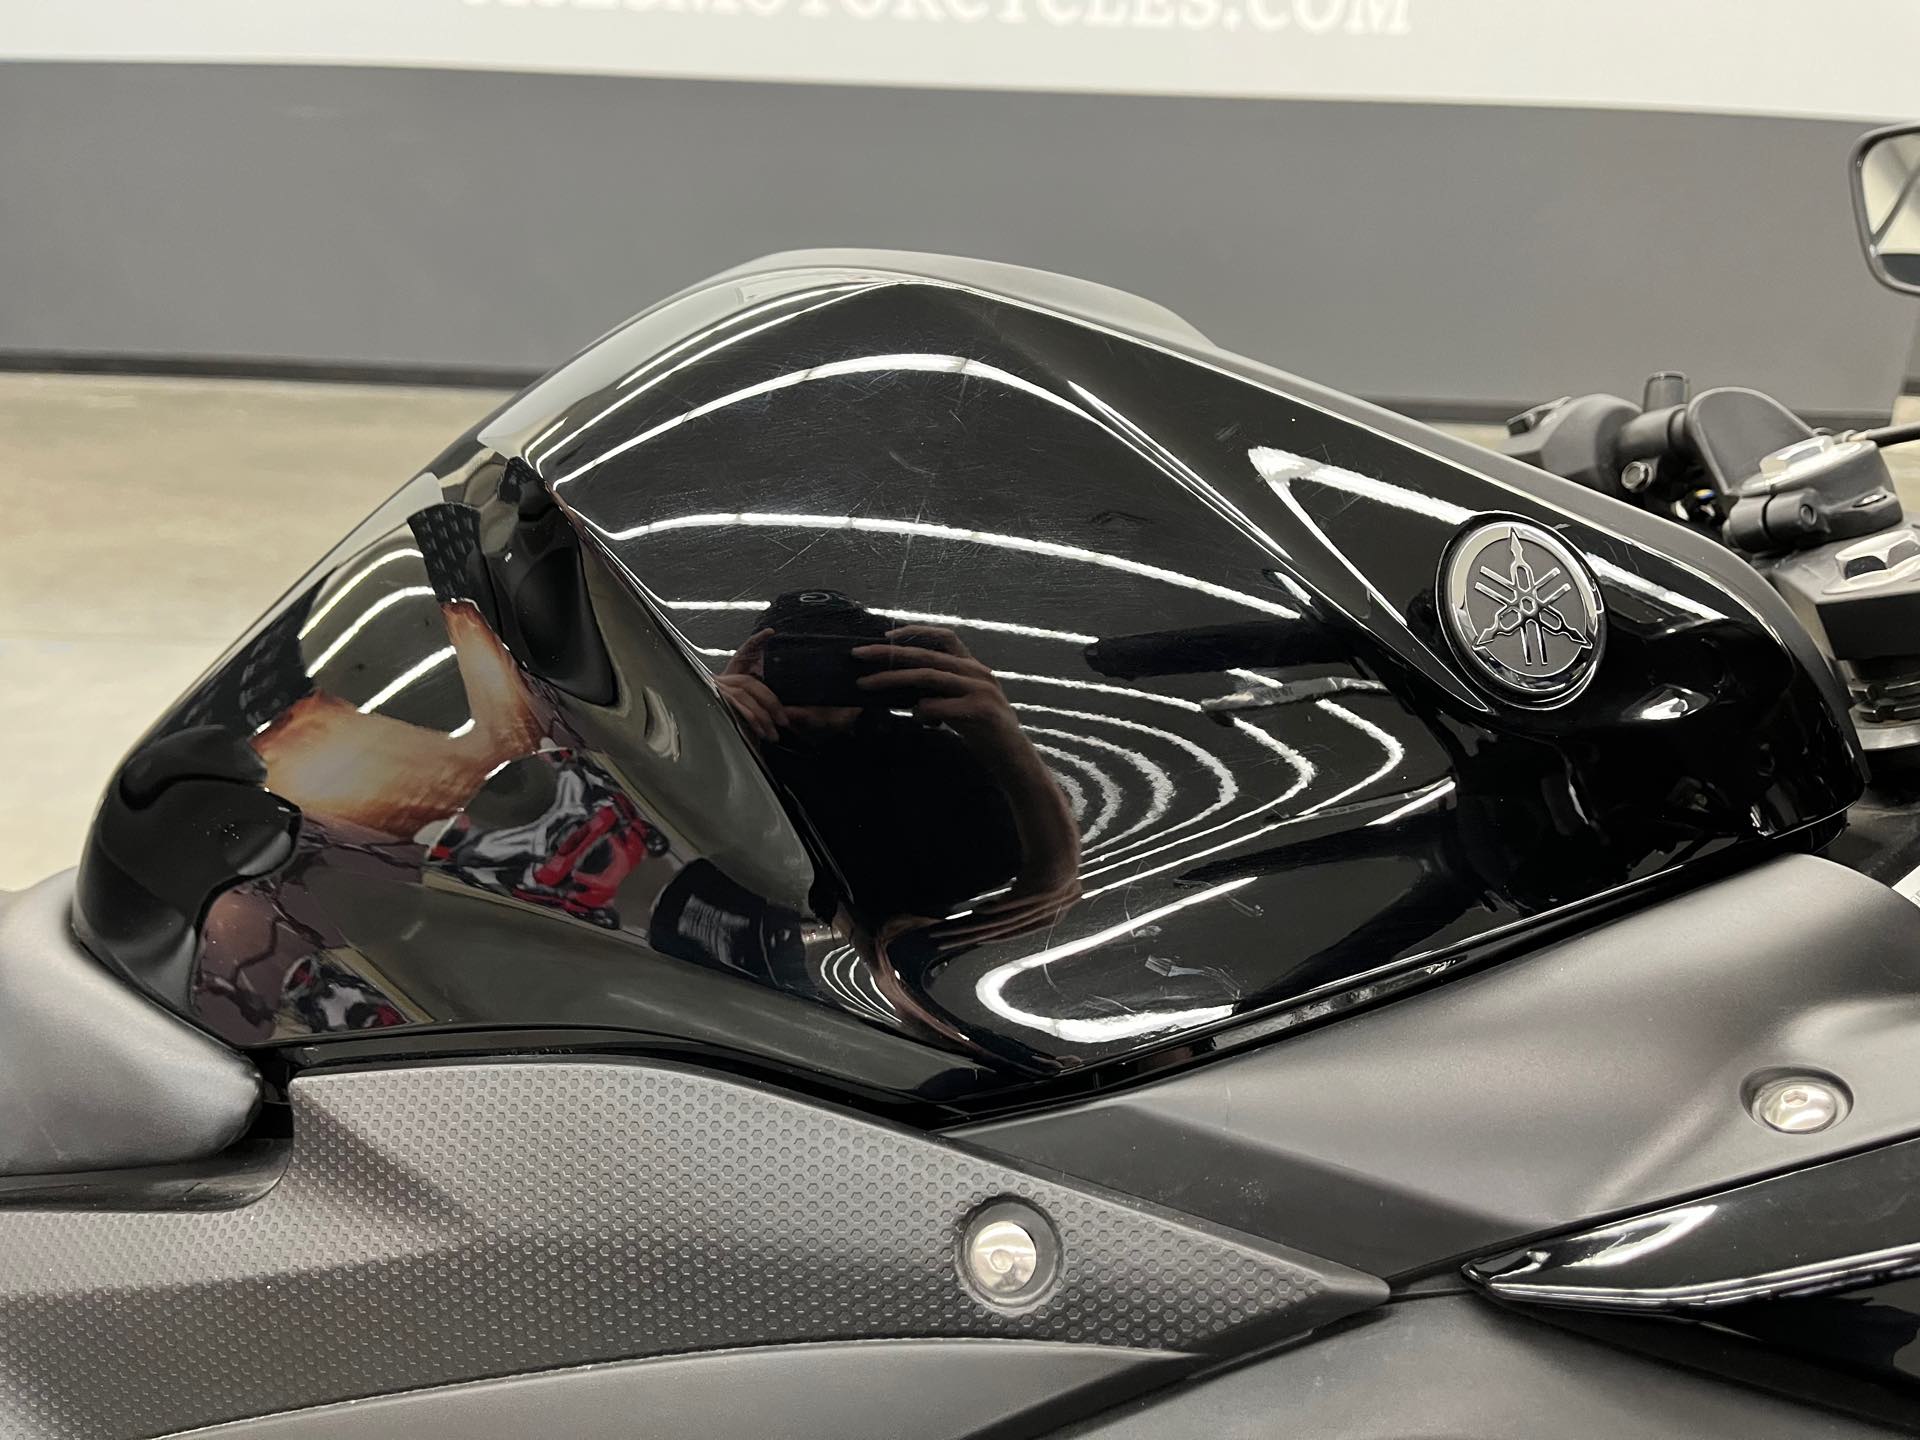 2018 Yamaha YZF R3 at Aces Motorcycles - Denver